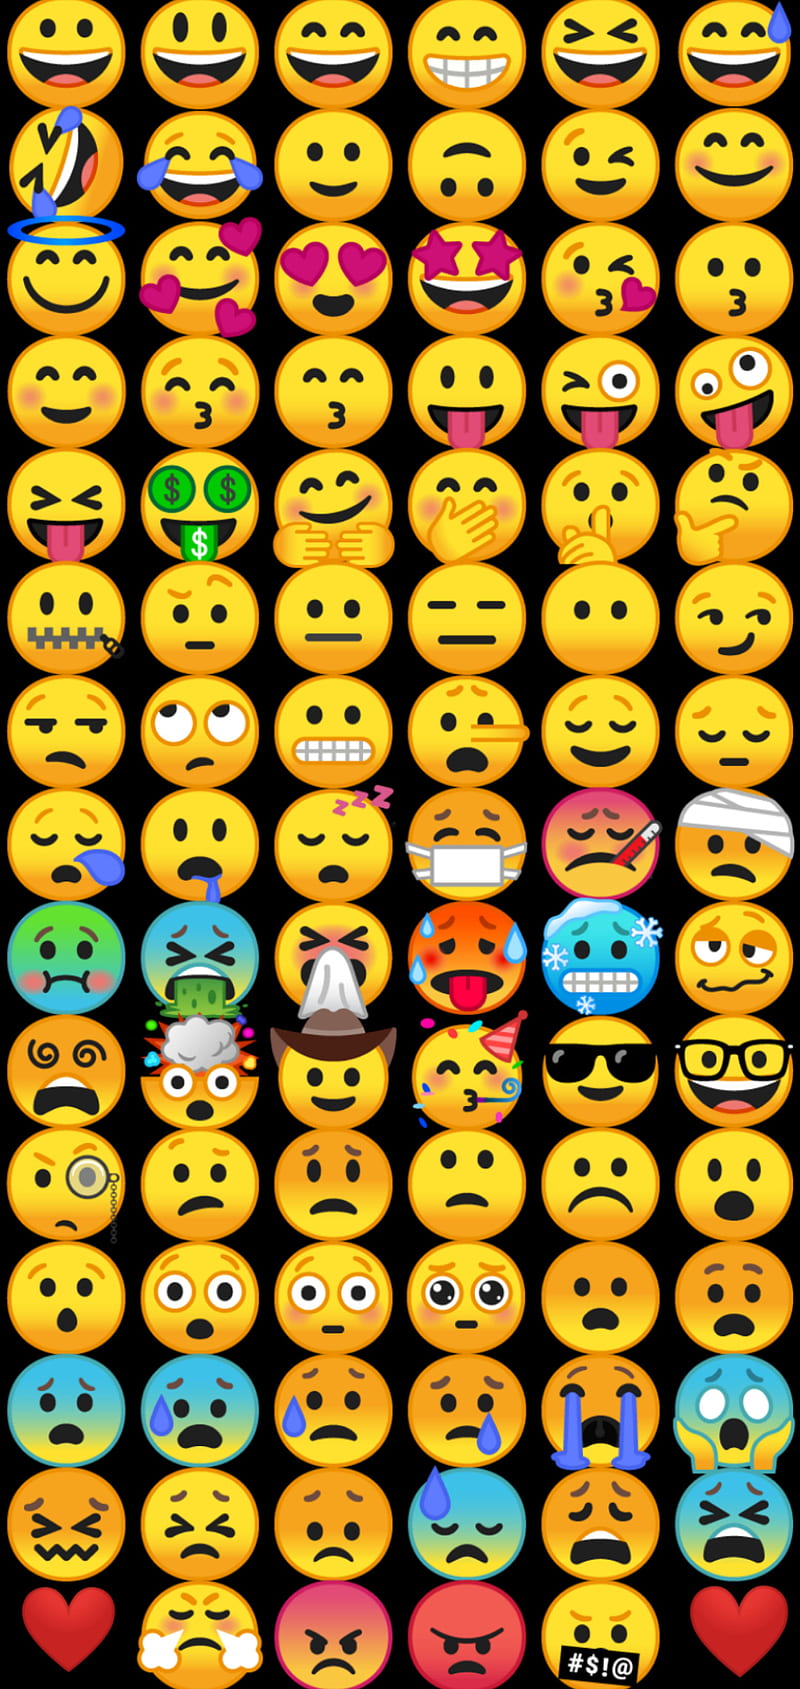 Total 97+ imagen emojis de diferentes colores - Viaterra.mx